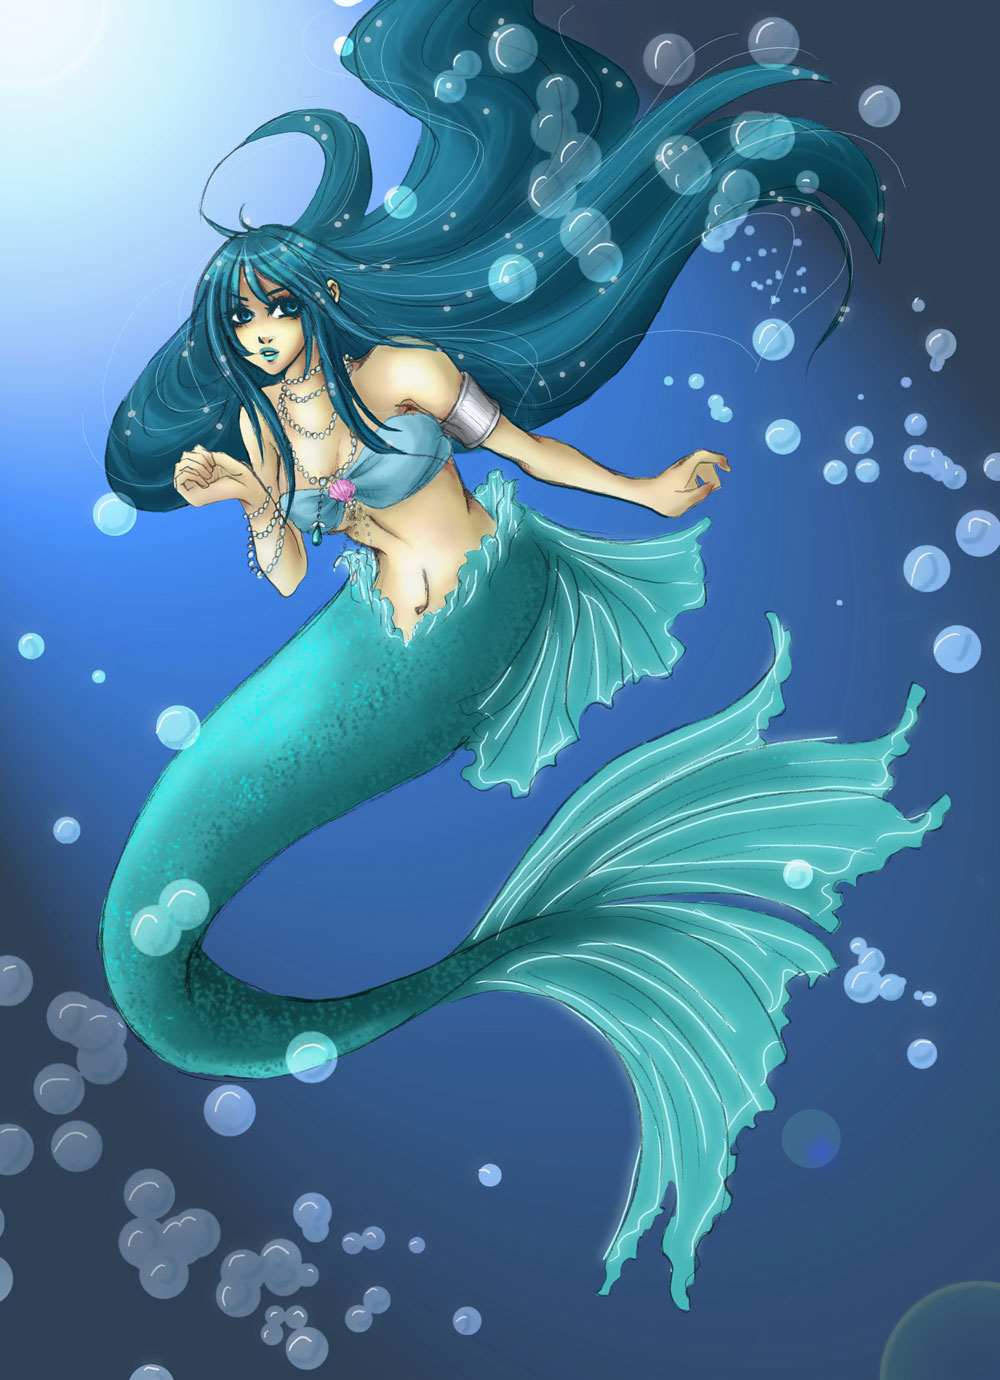 mermaiddd by Haruto